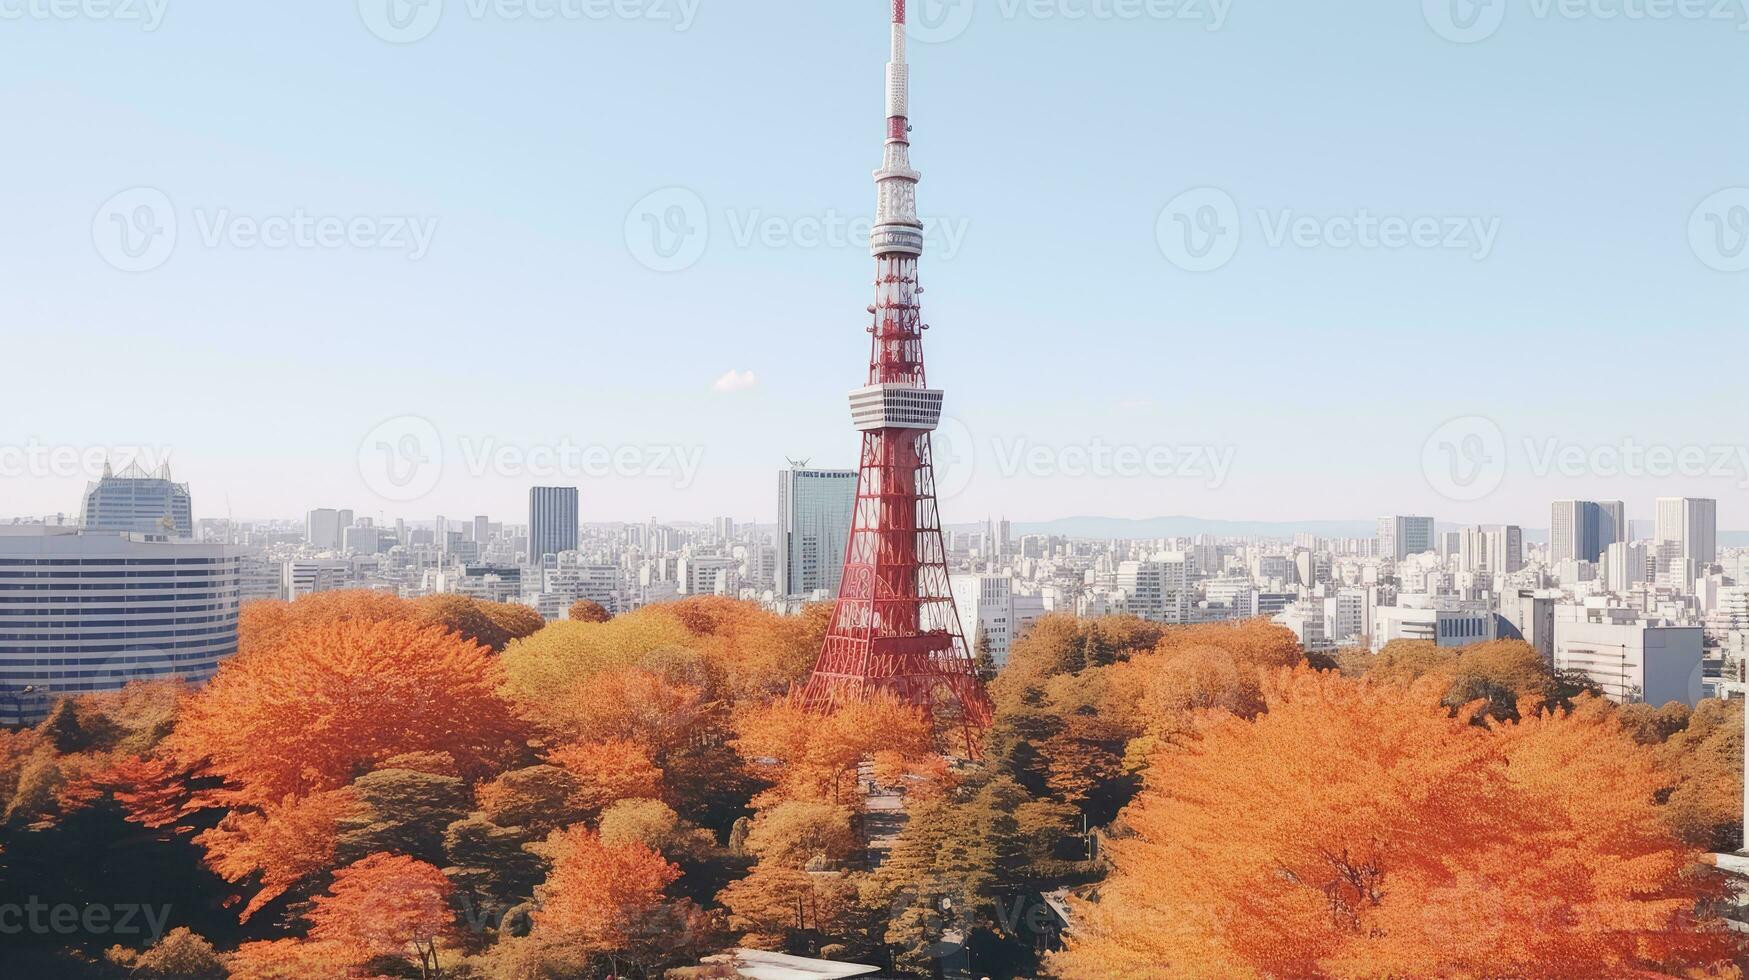 Japan Zen Tokyo Fernseher Turm Landschaft Panorama Aussicht Fotografie Sakura Blumen Pagode Frieden Stille foto